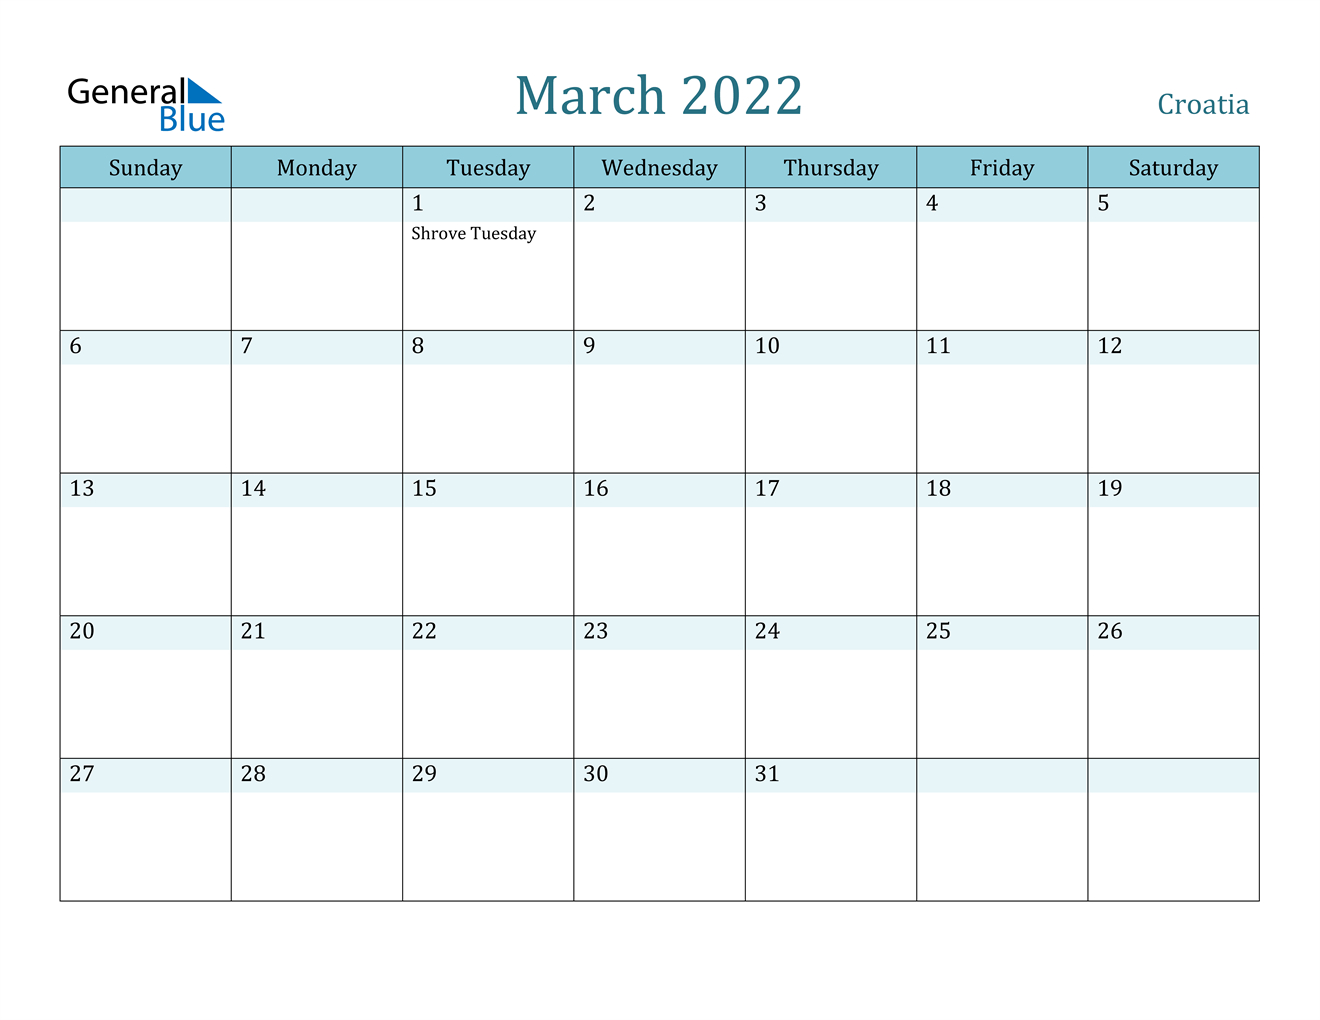 March 2022 Calendar - Croatia